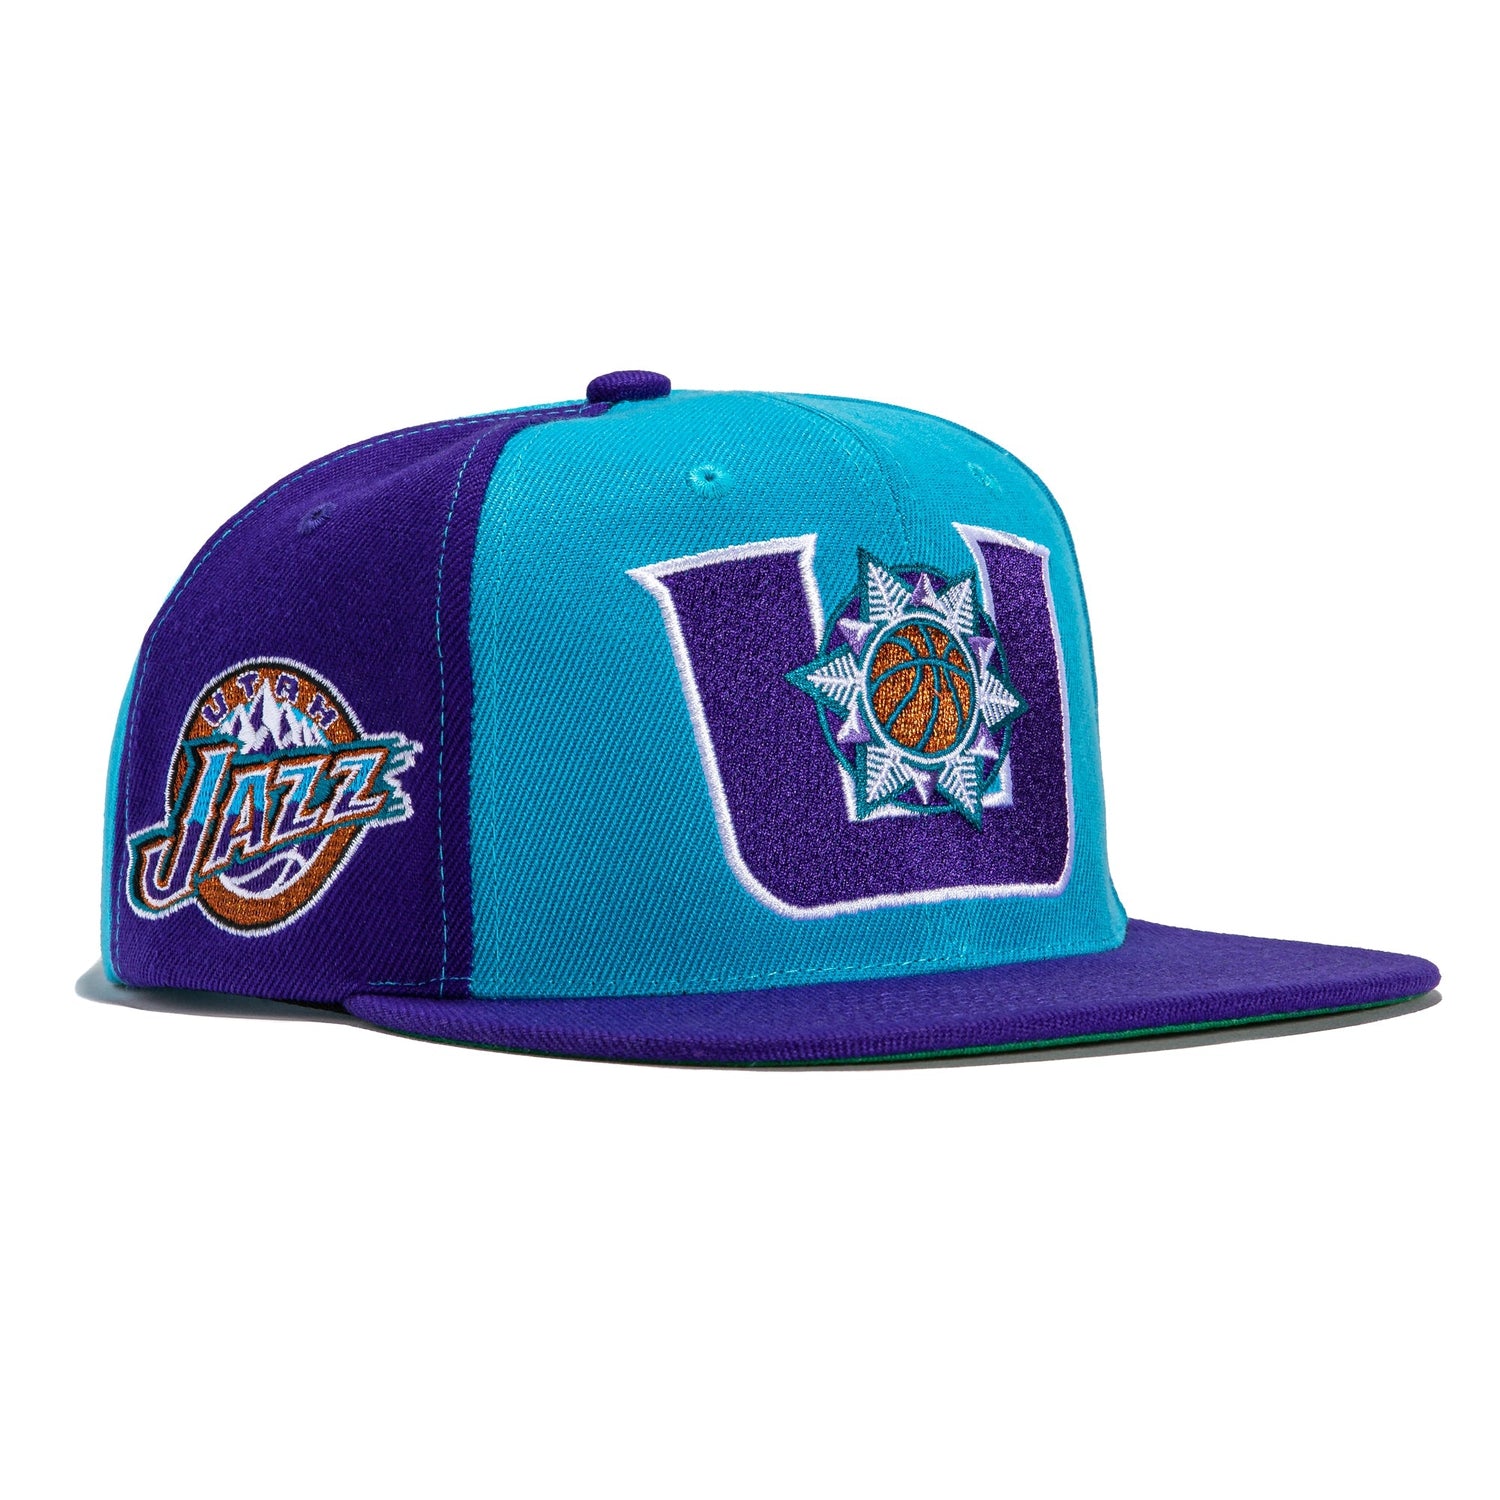 Utah Jazz Sharktooth Teal/Purple Snapback - Mitchell & Ness cap